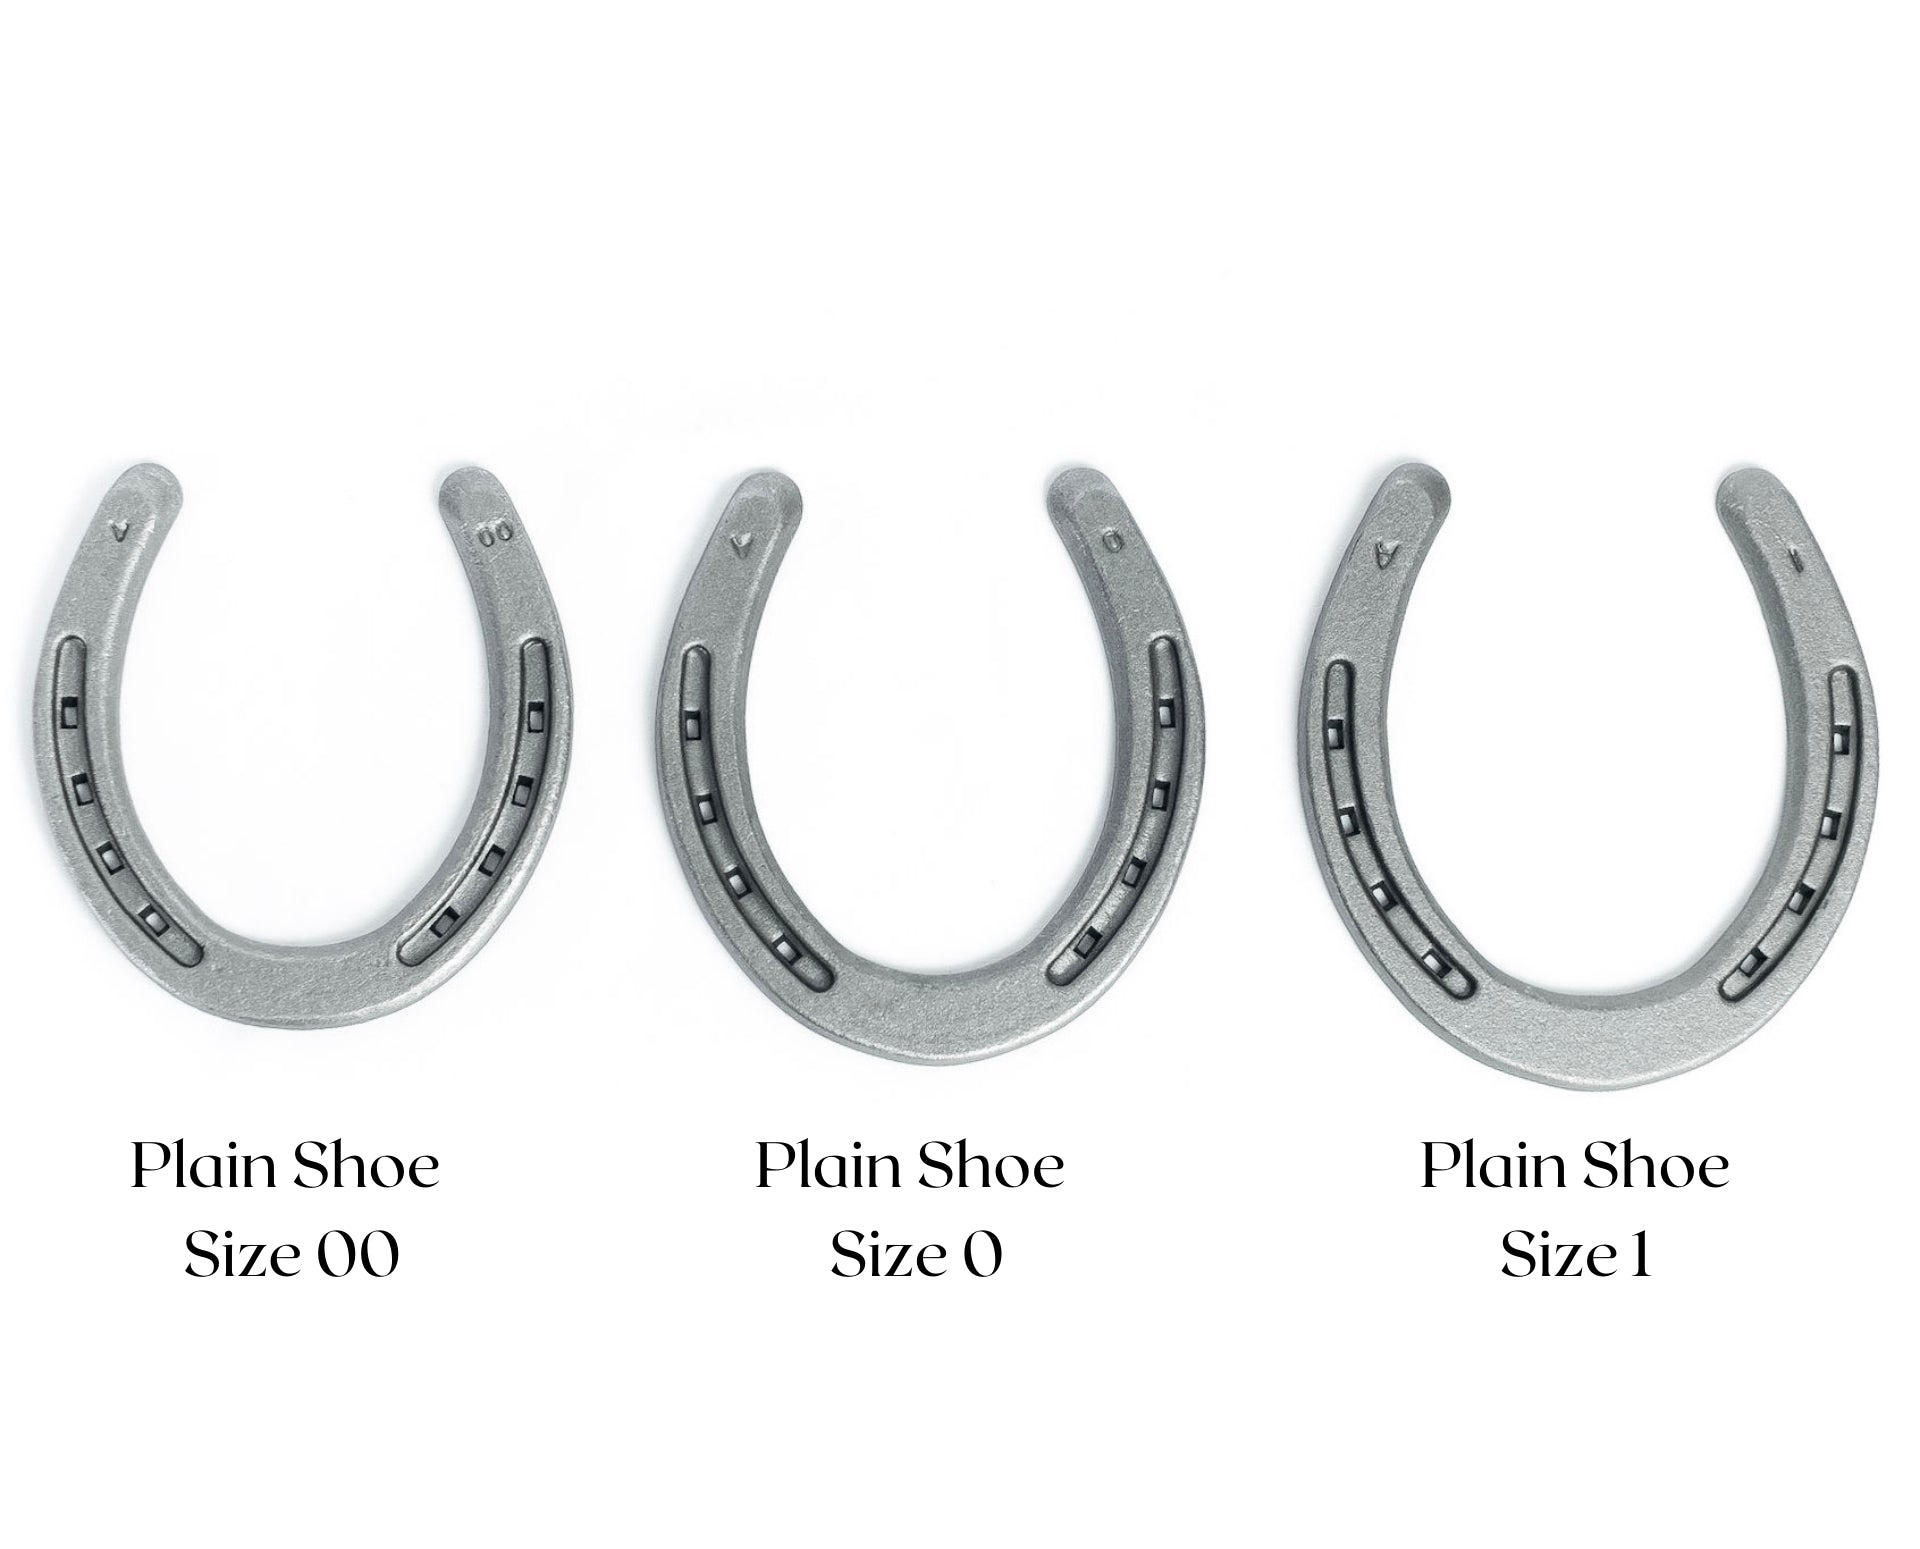 New Steel Horseshoes - Plain Shoe Size 1 - Sand Blasted Steel